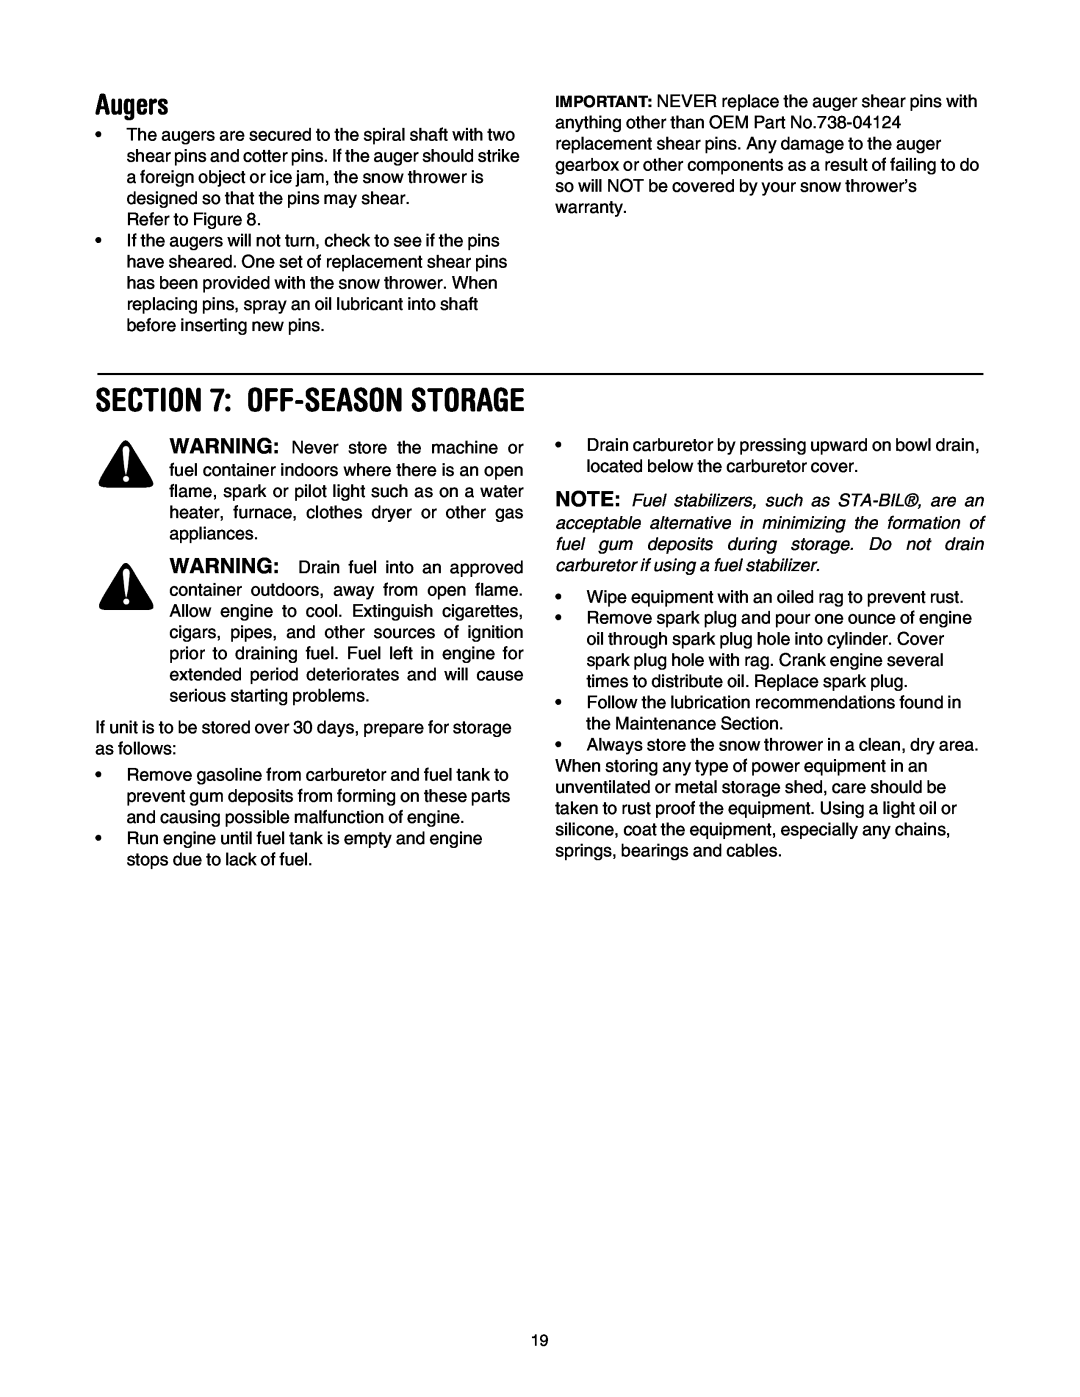 MTD 6DE manual Off-Seasonstorage 